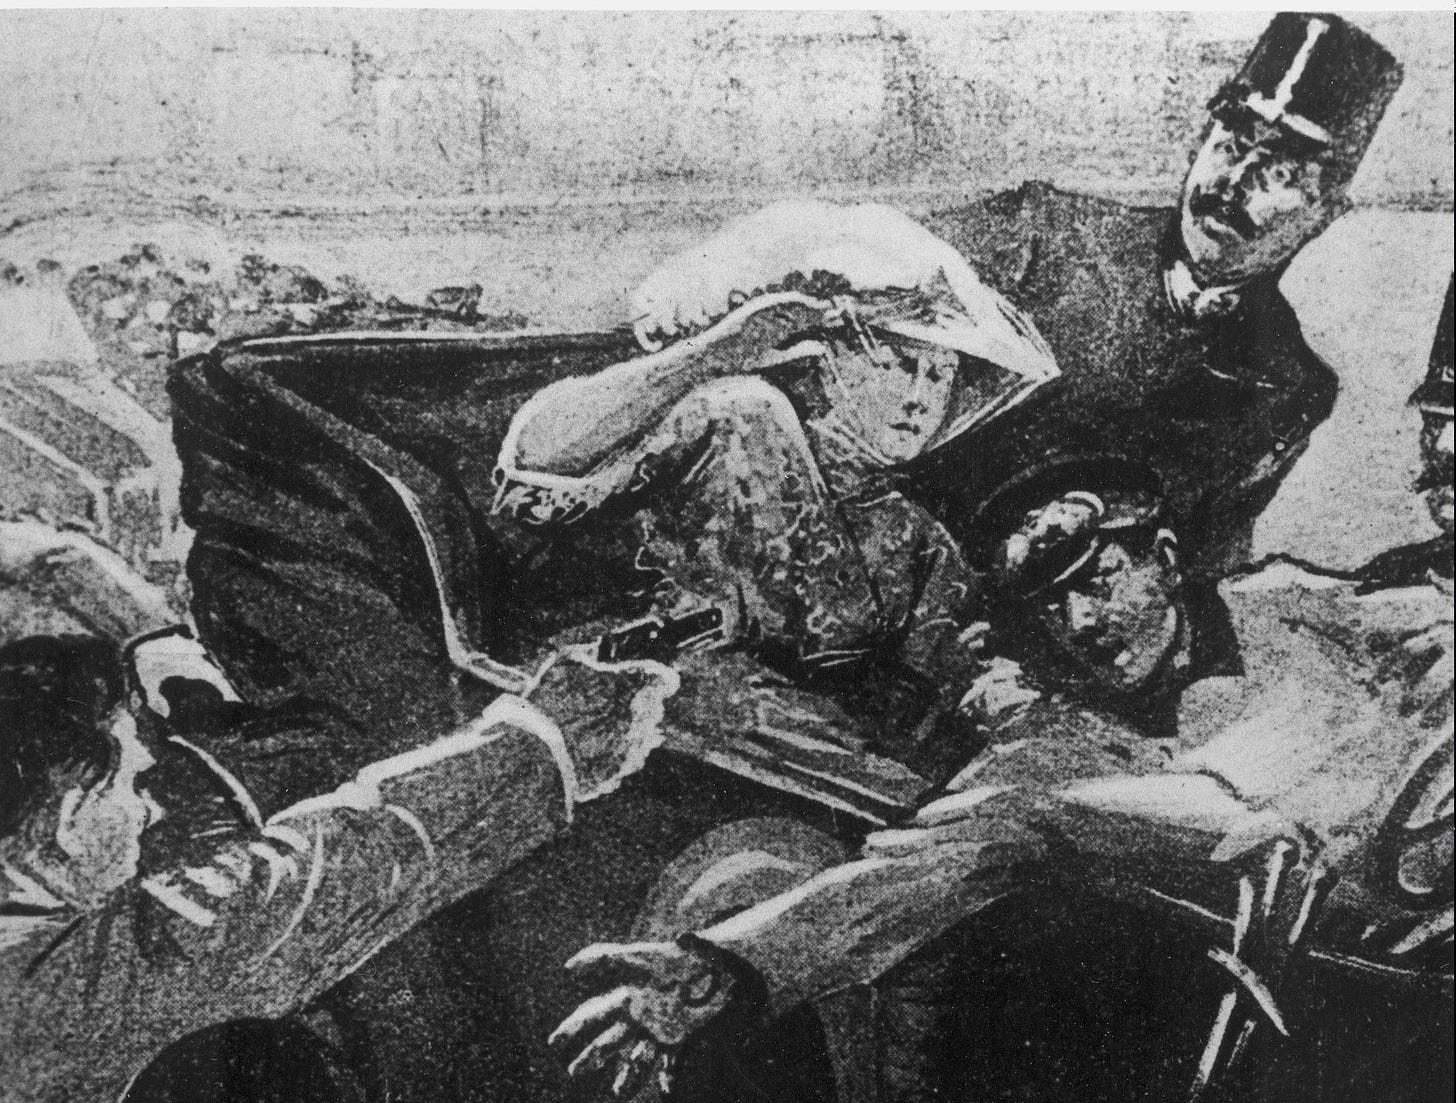 Assassination of Archduke Franz Ferdinand - Topics on Newspapers.com